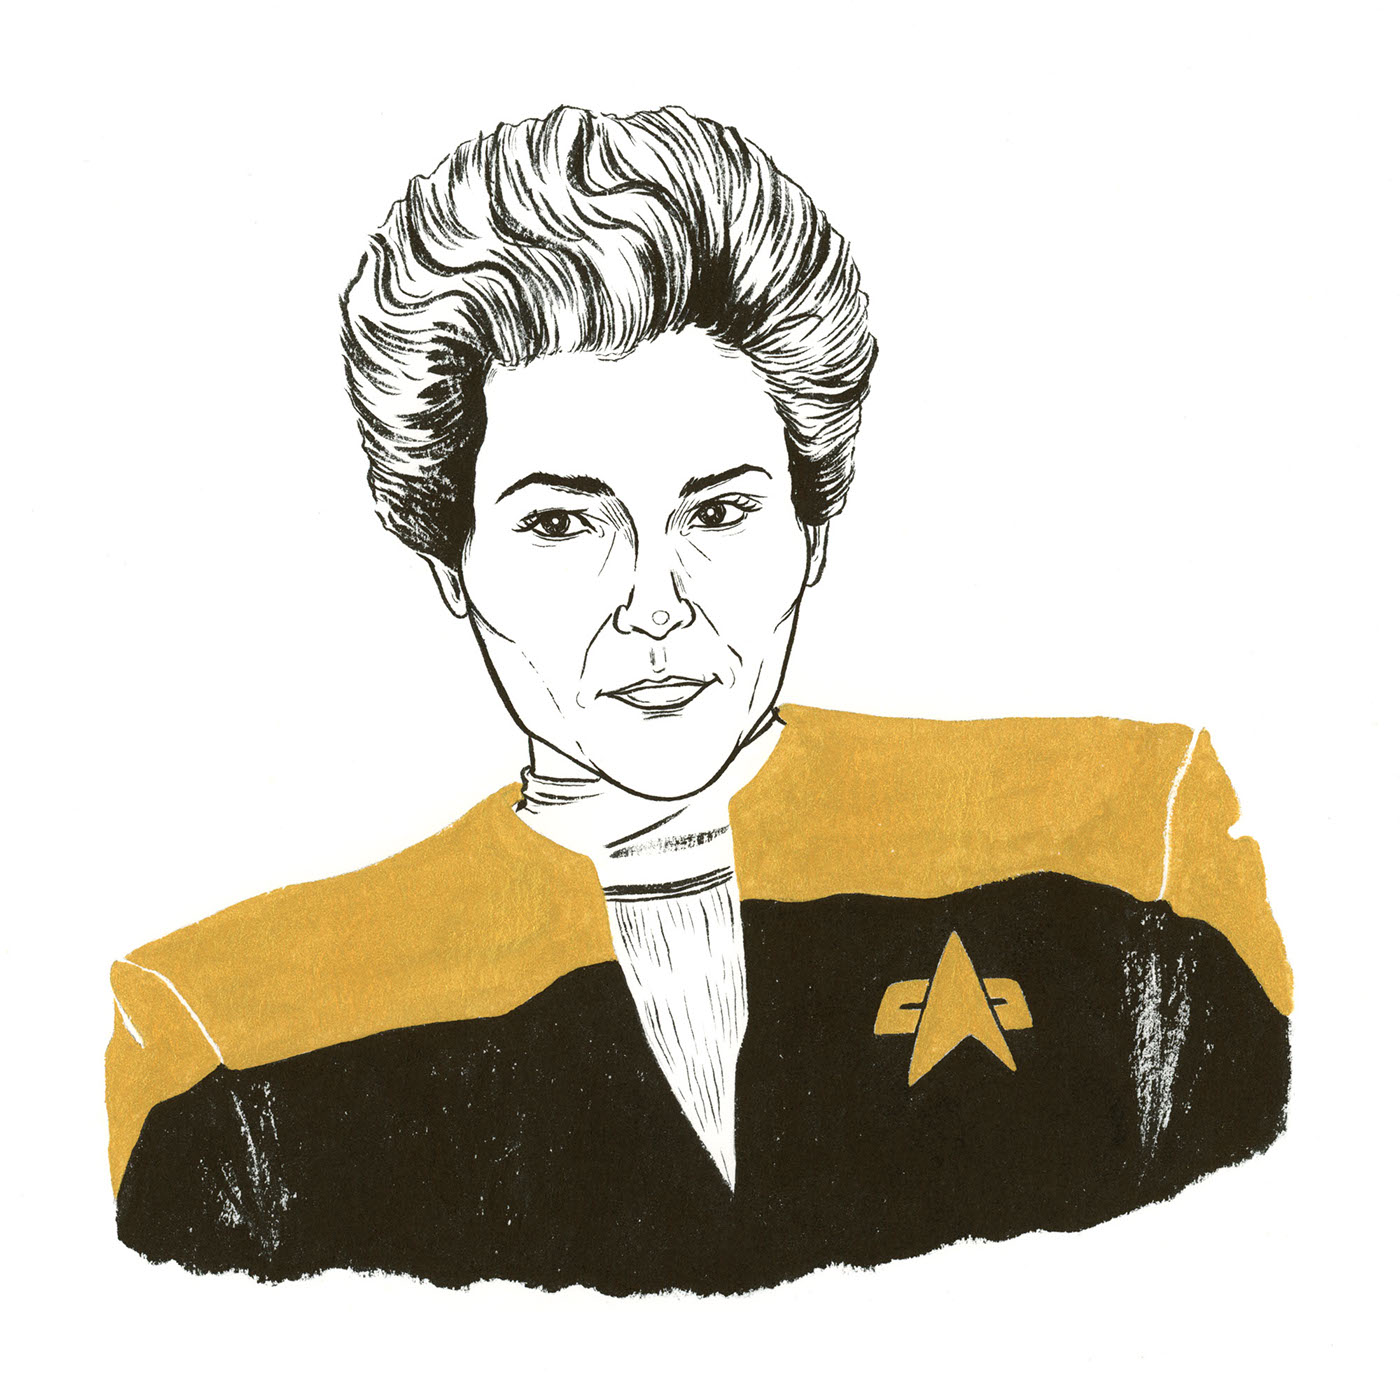 Star Trek Star Trek Voyager Star Trek TNG Star Trek TOS Star Trek VOY Captain Janeway tasha yar uhura portraits gouache